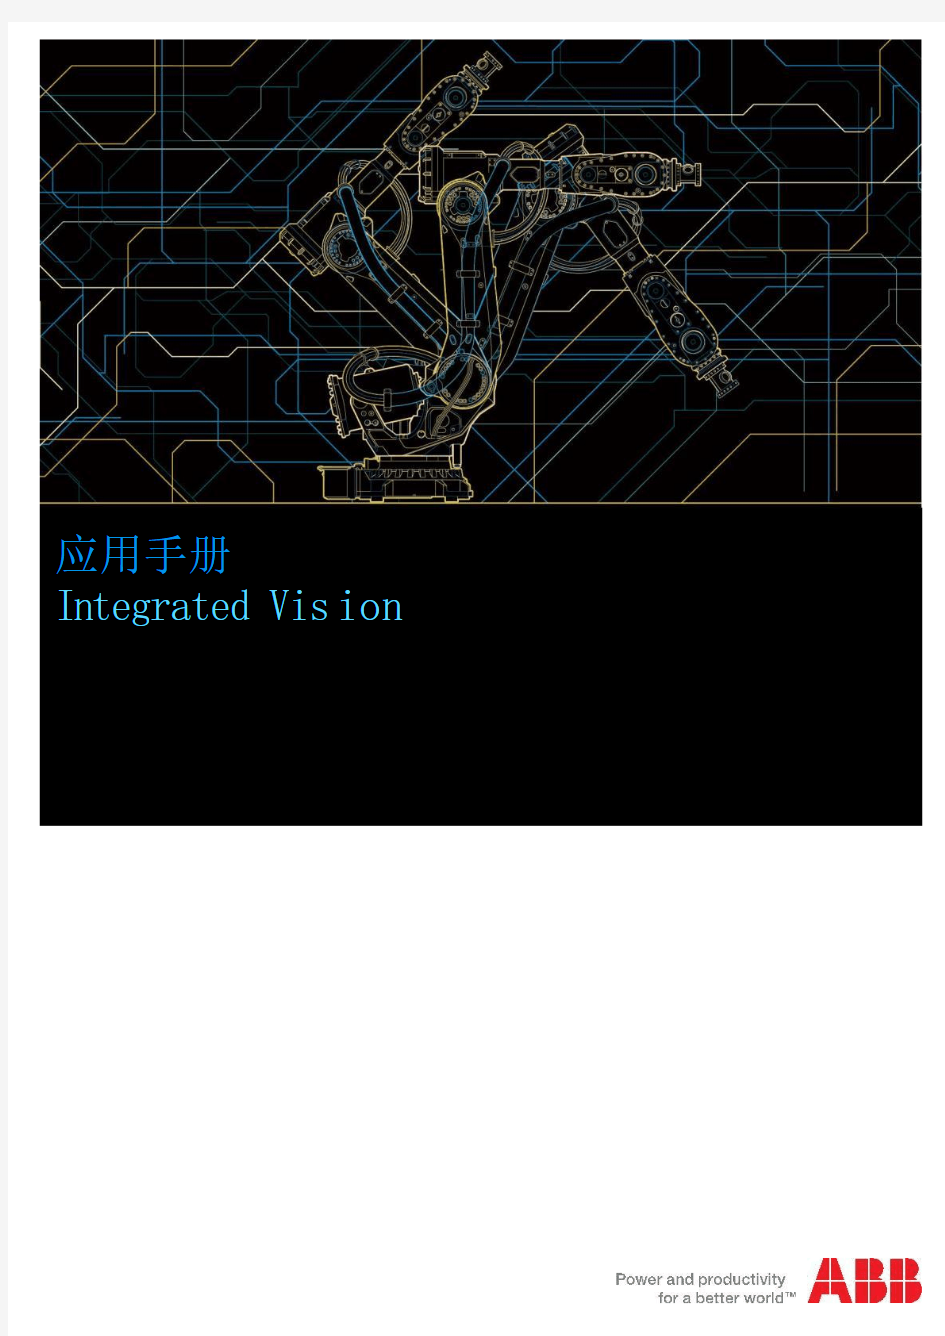 abb工业机器人集成视觉应用手册(中文)